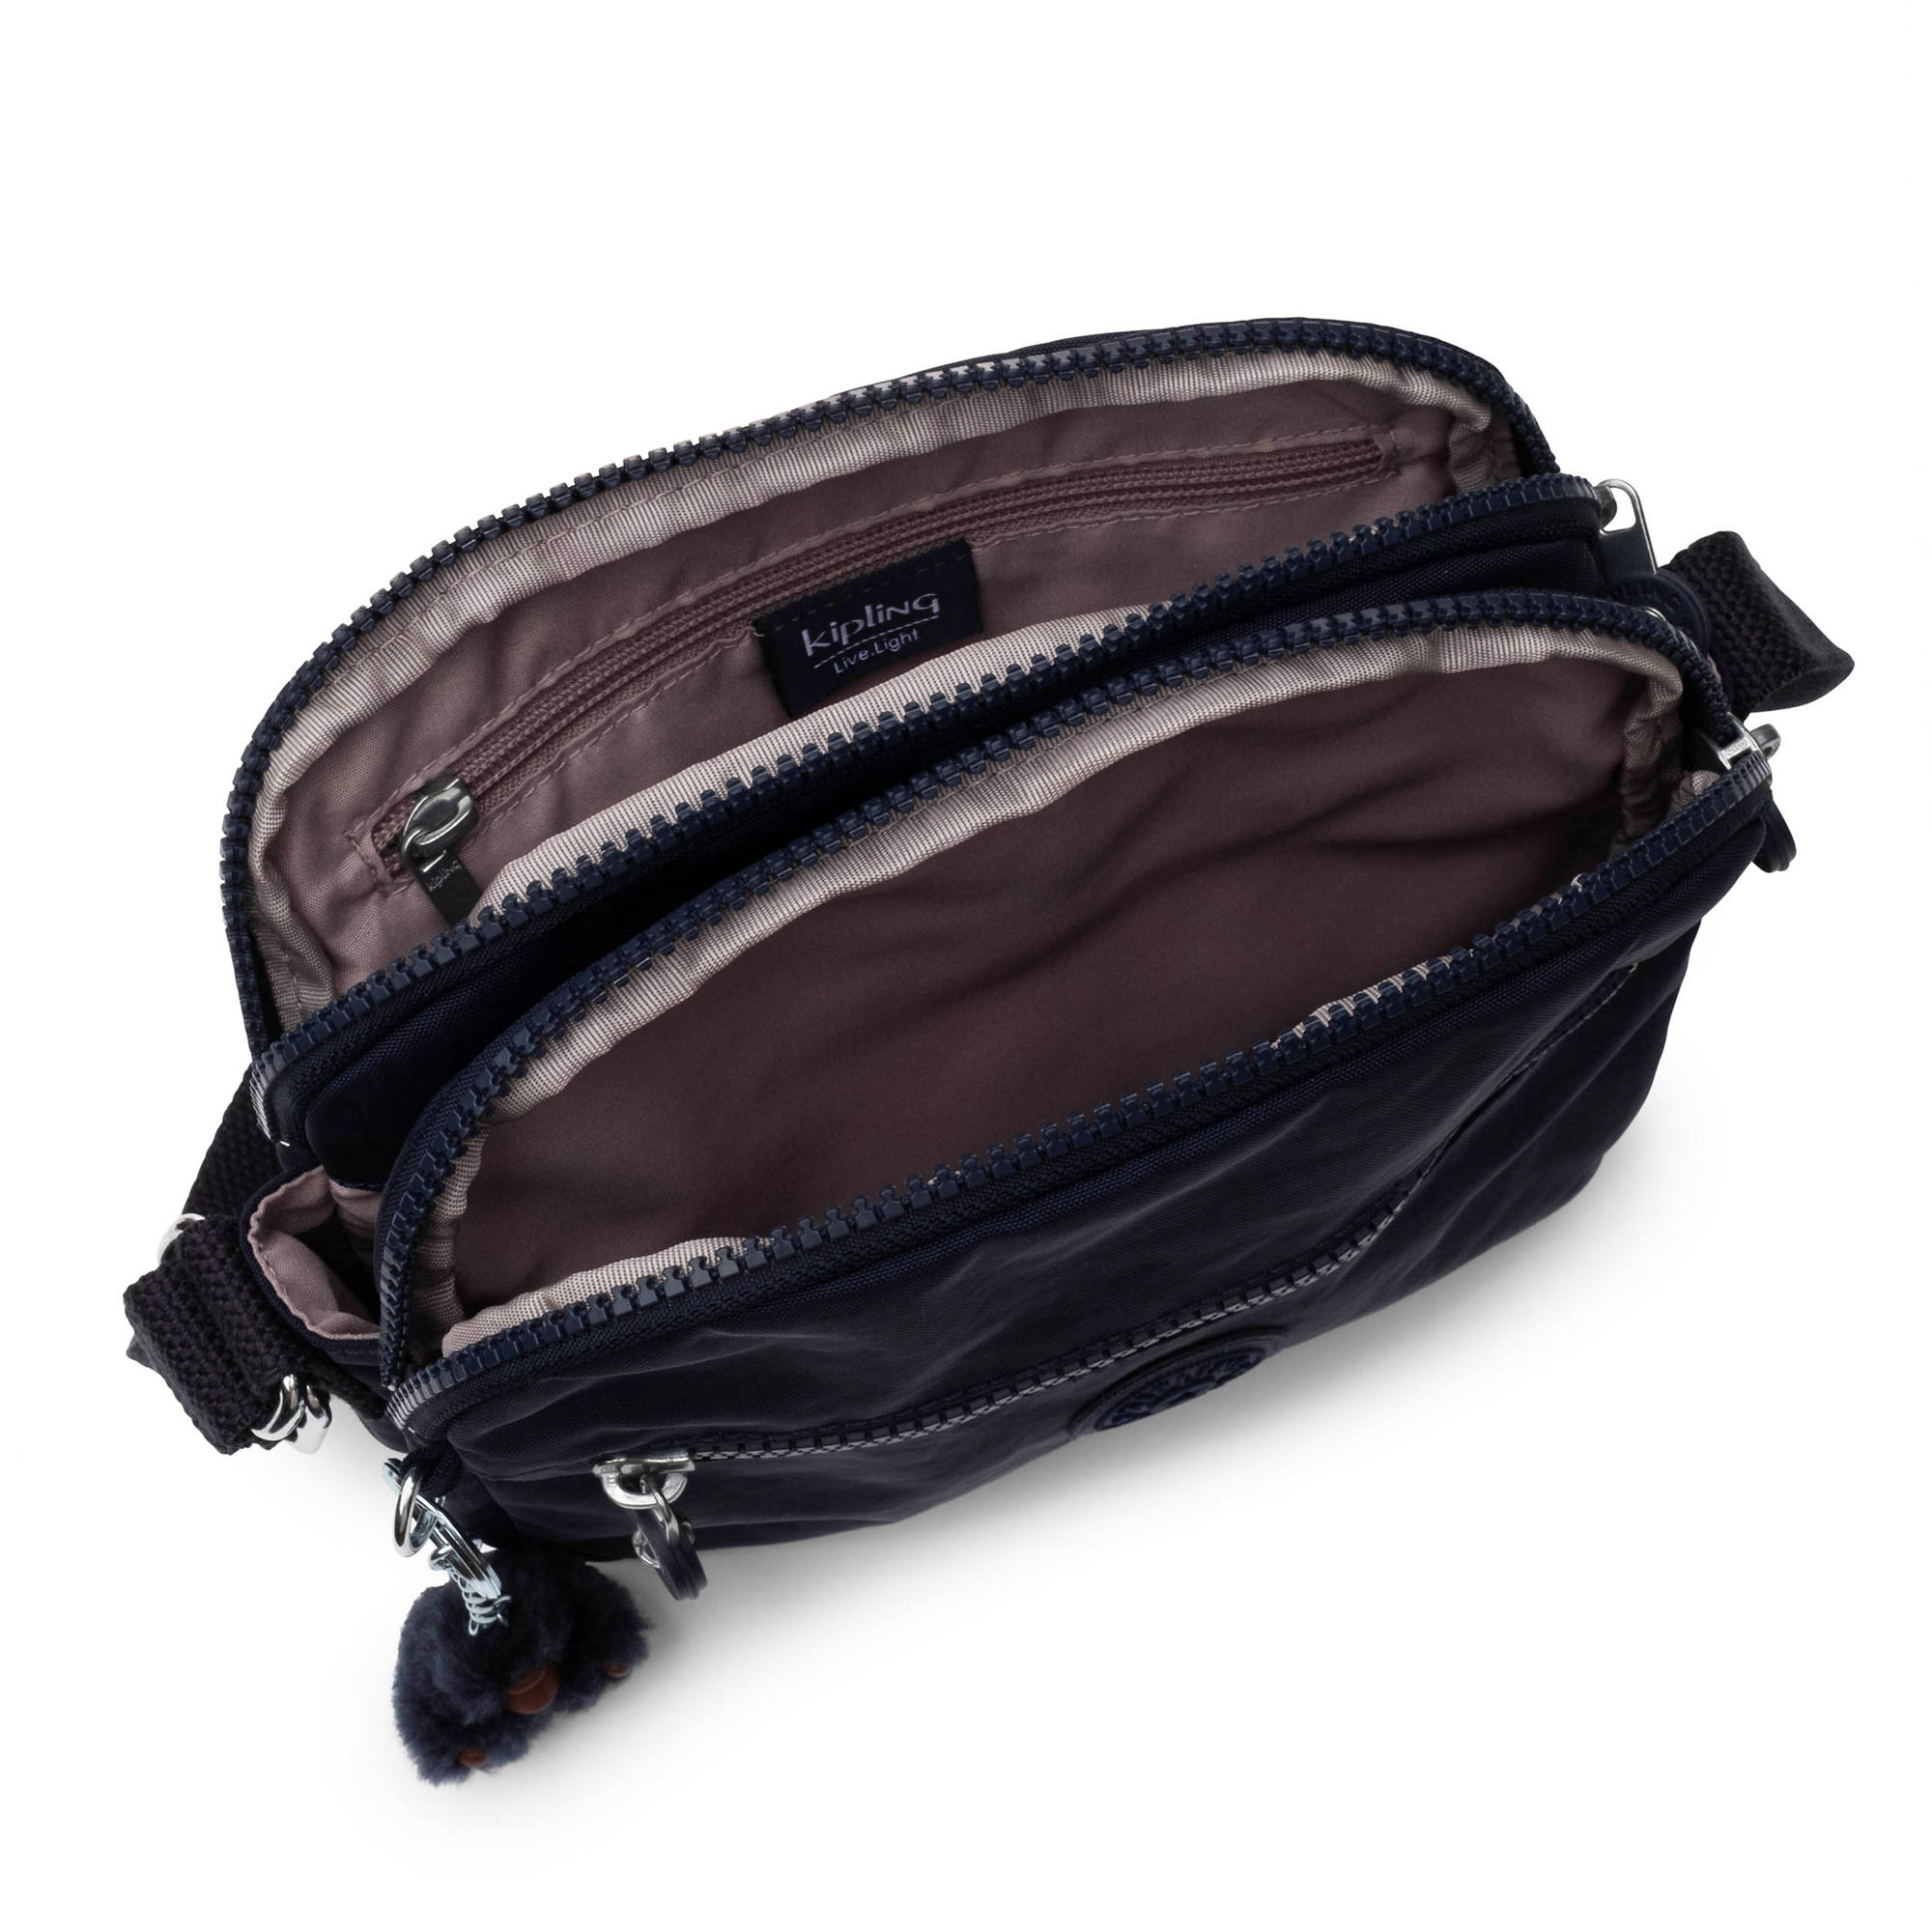 Kipling Keefe Crossbody Bag | eBay